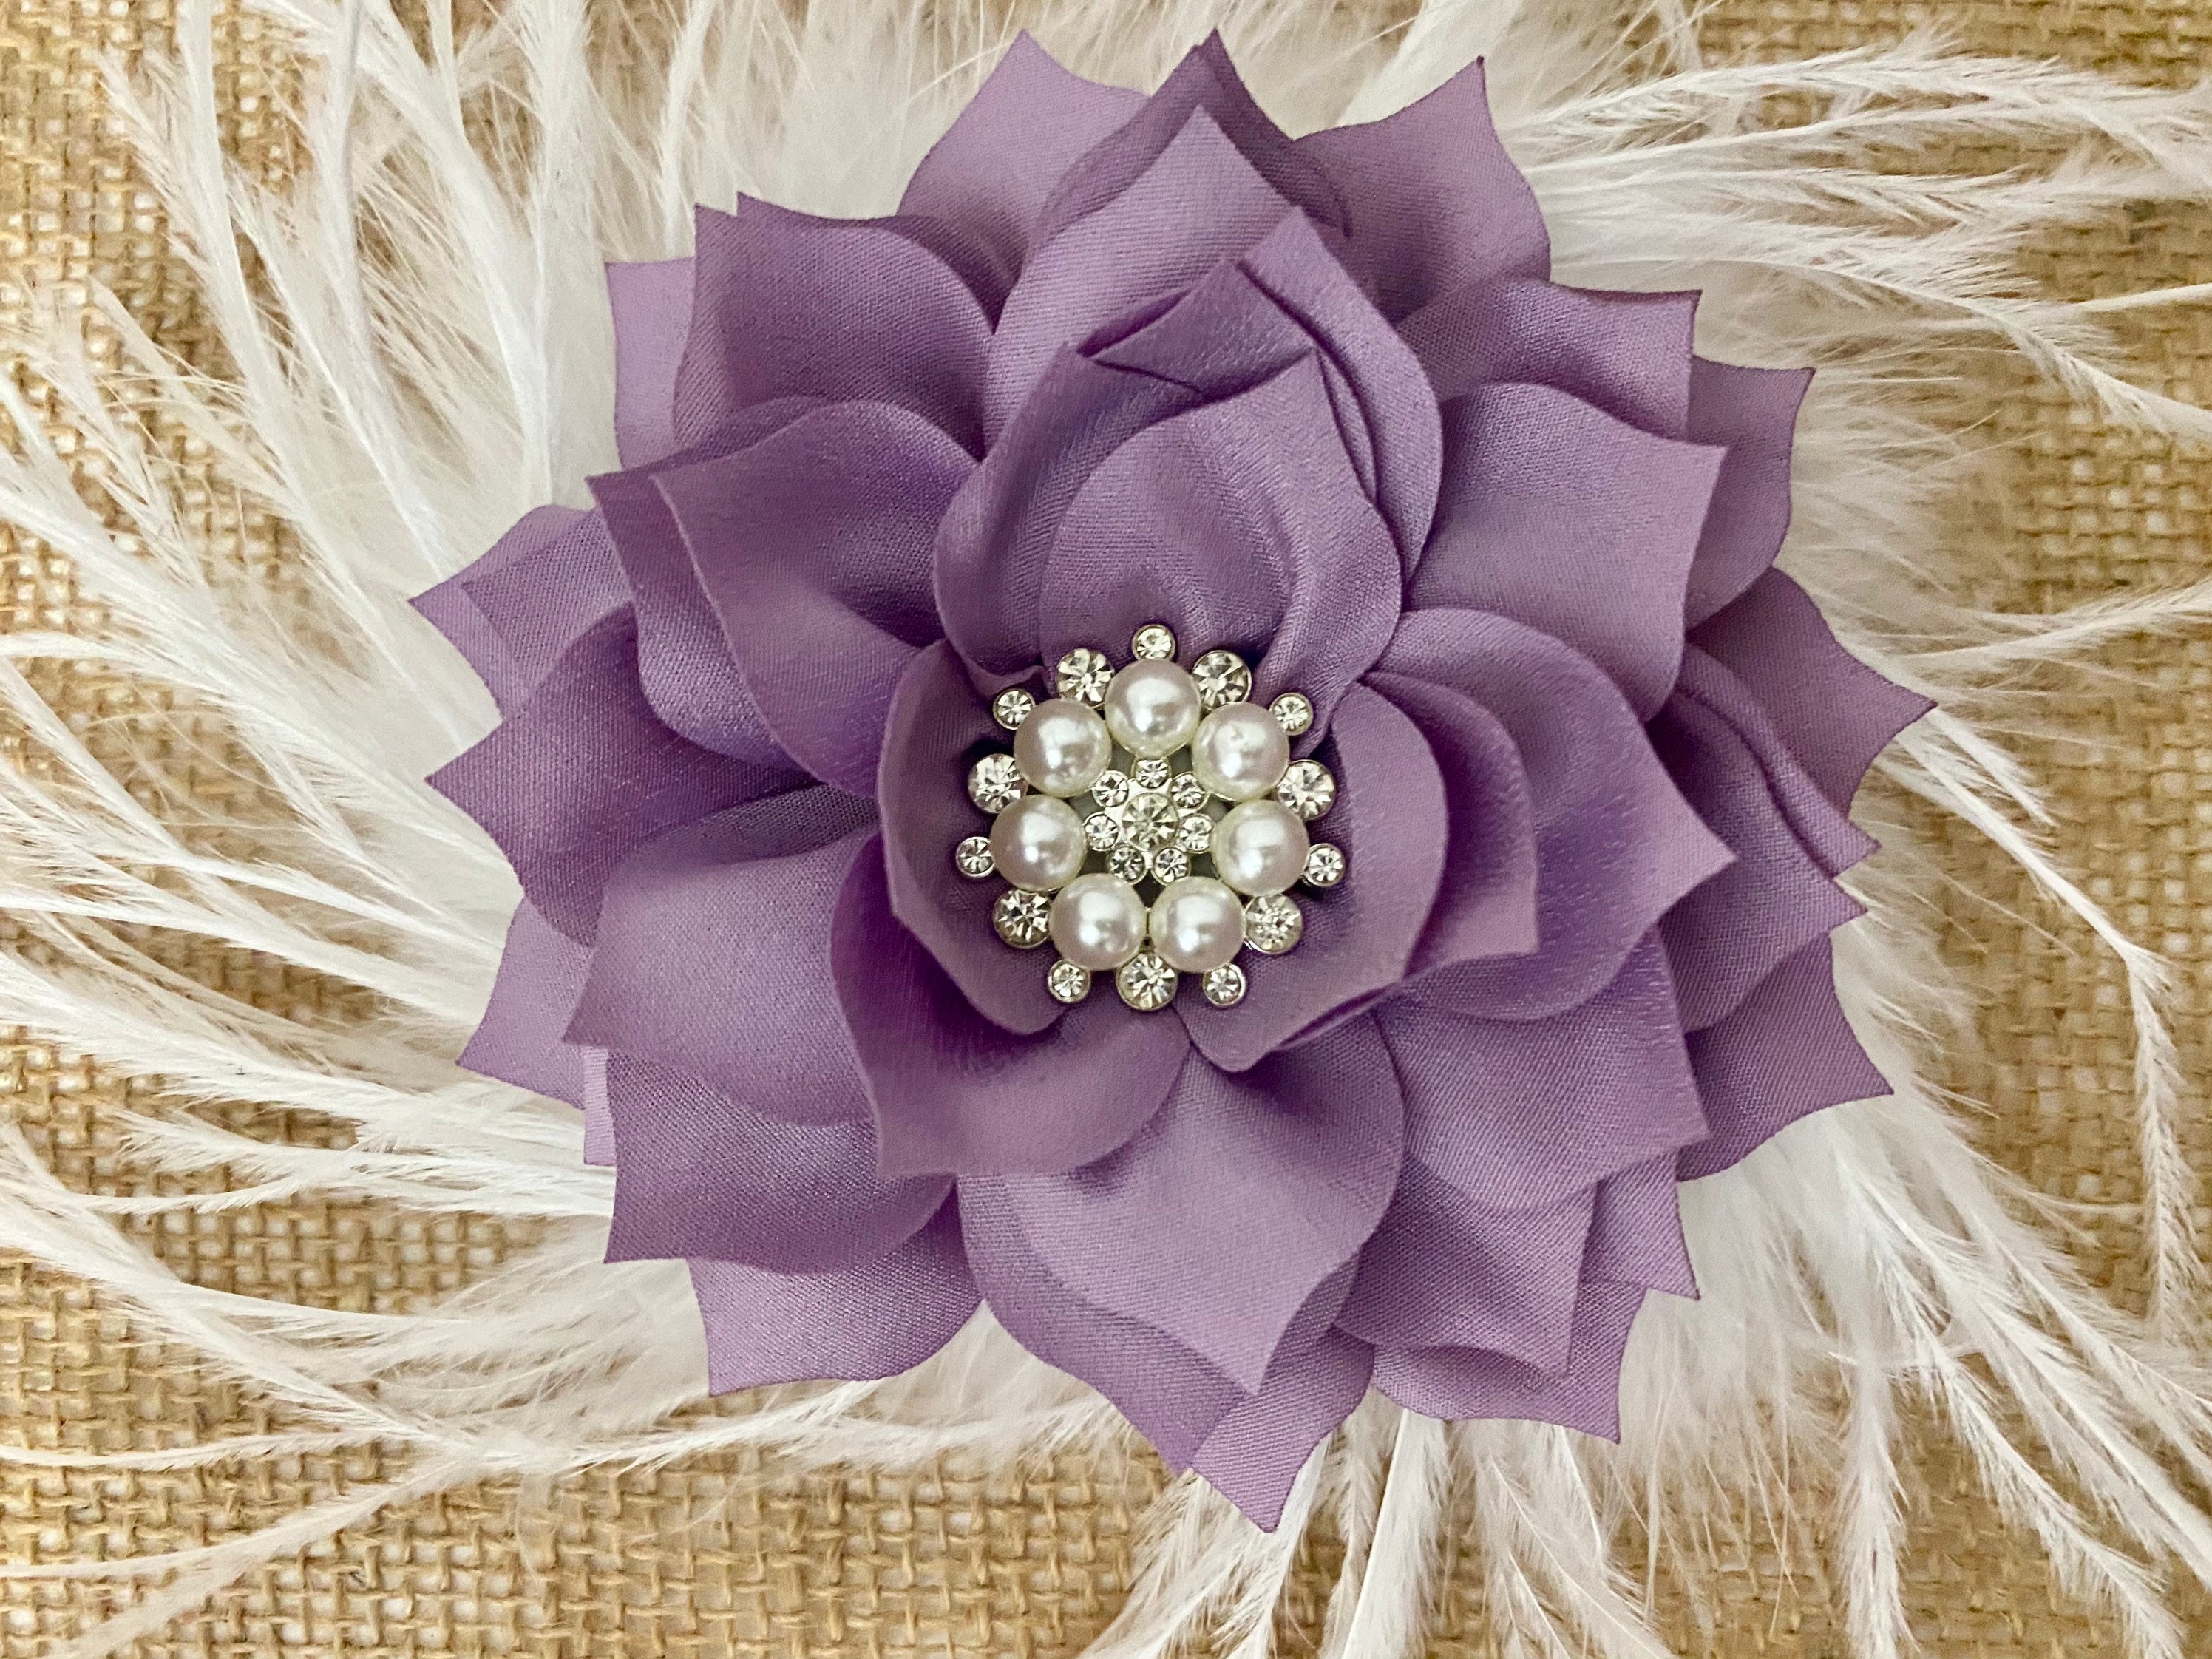 Brooch or Sash Bridal Purple Flowers with Rhinestone Brooches Hair Fascinator,Clip